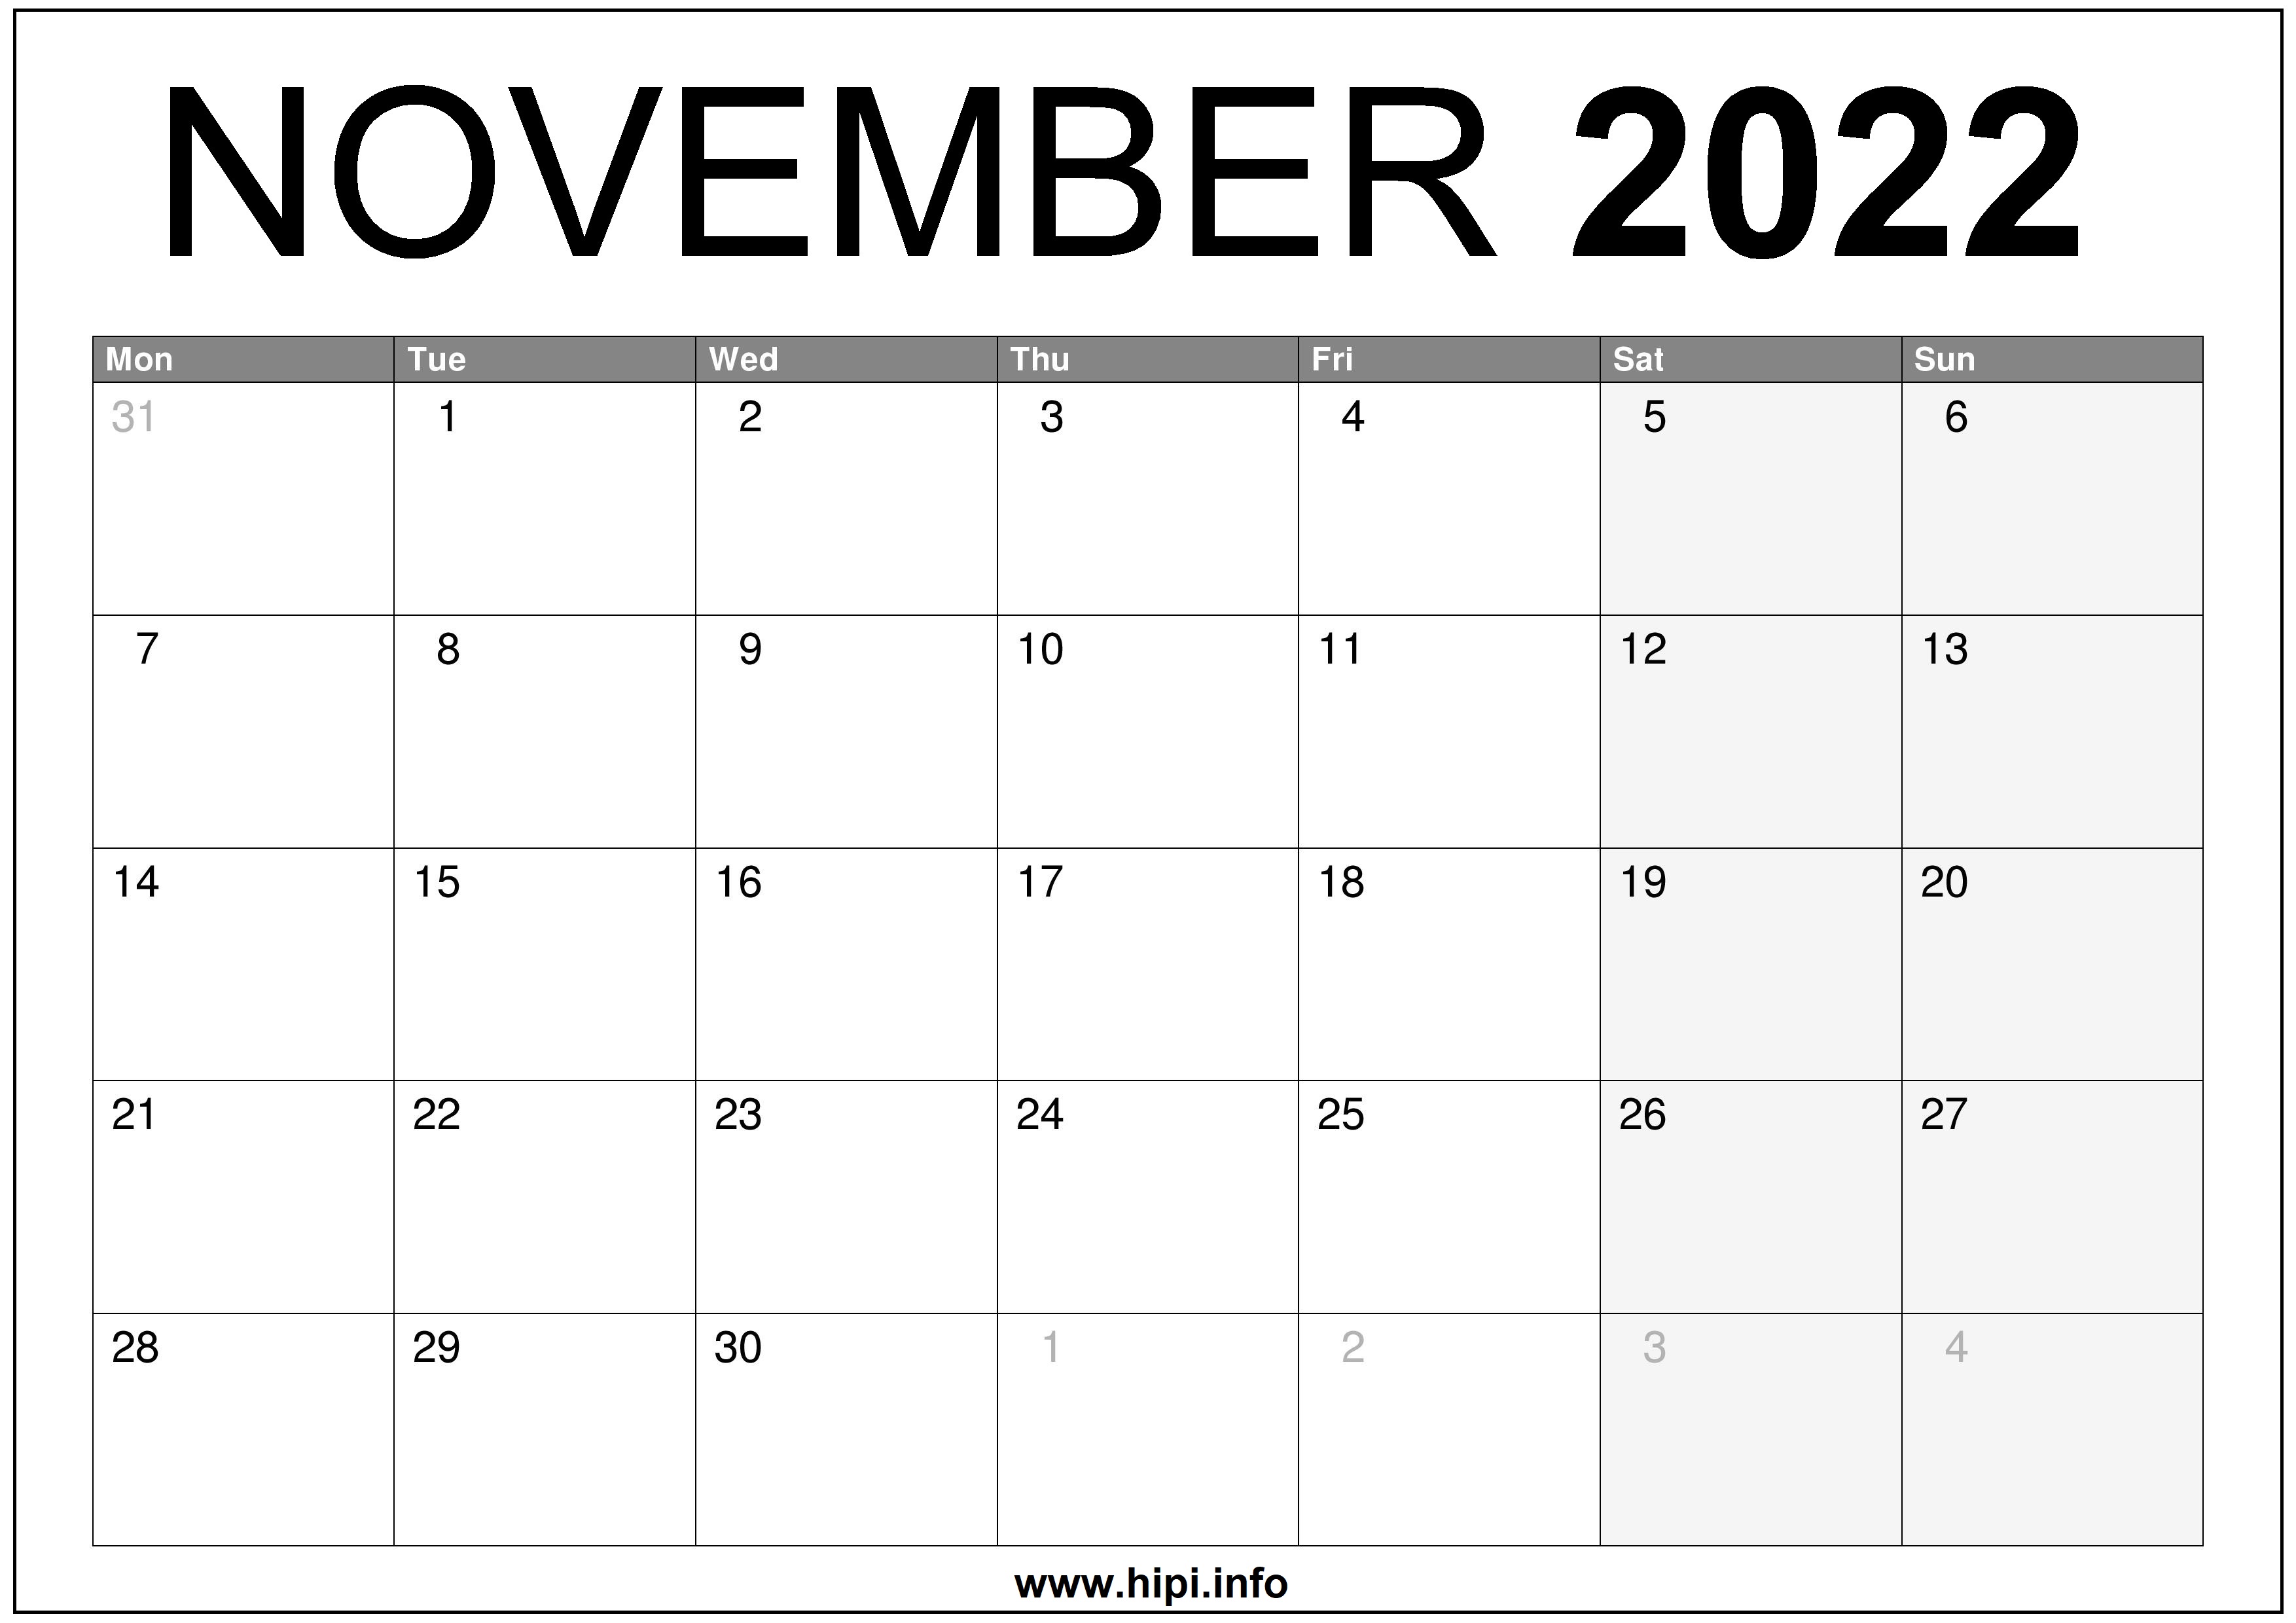 Free November 2022 Calendar November 2022 Uk Calendar Printable Free - Hipi.info | Calendars Printable  Free